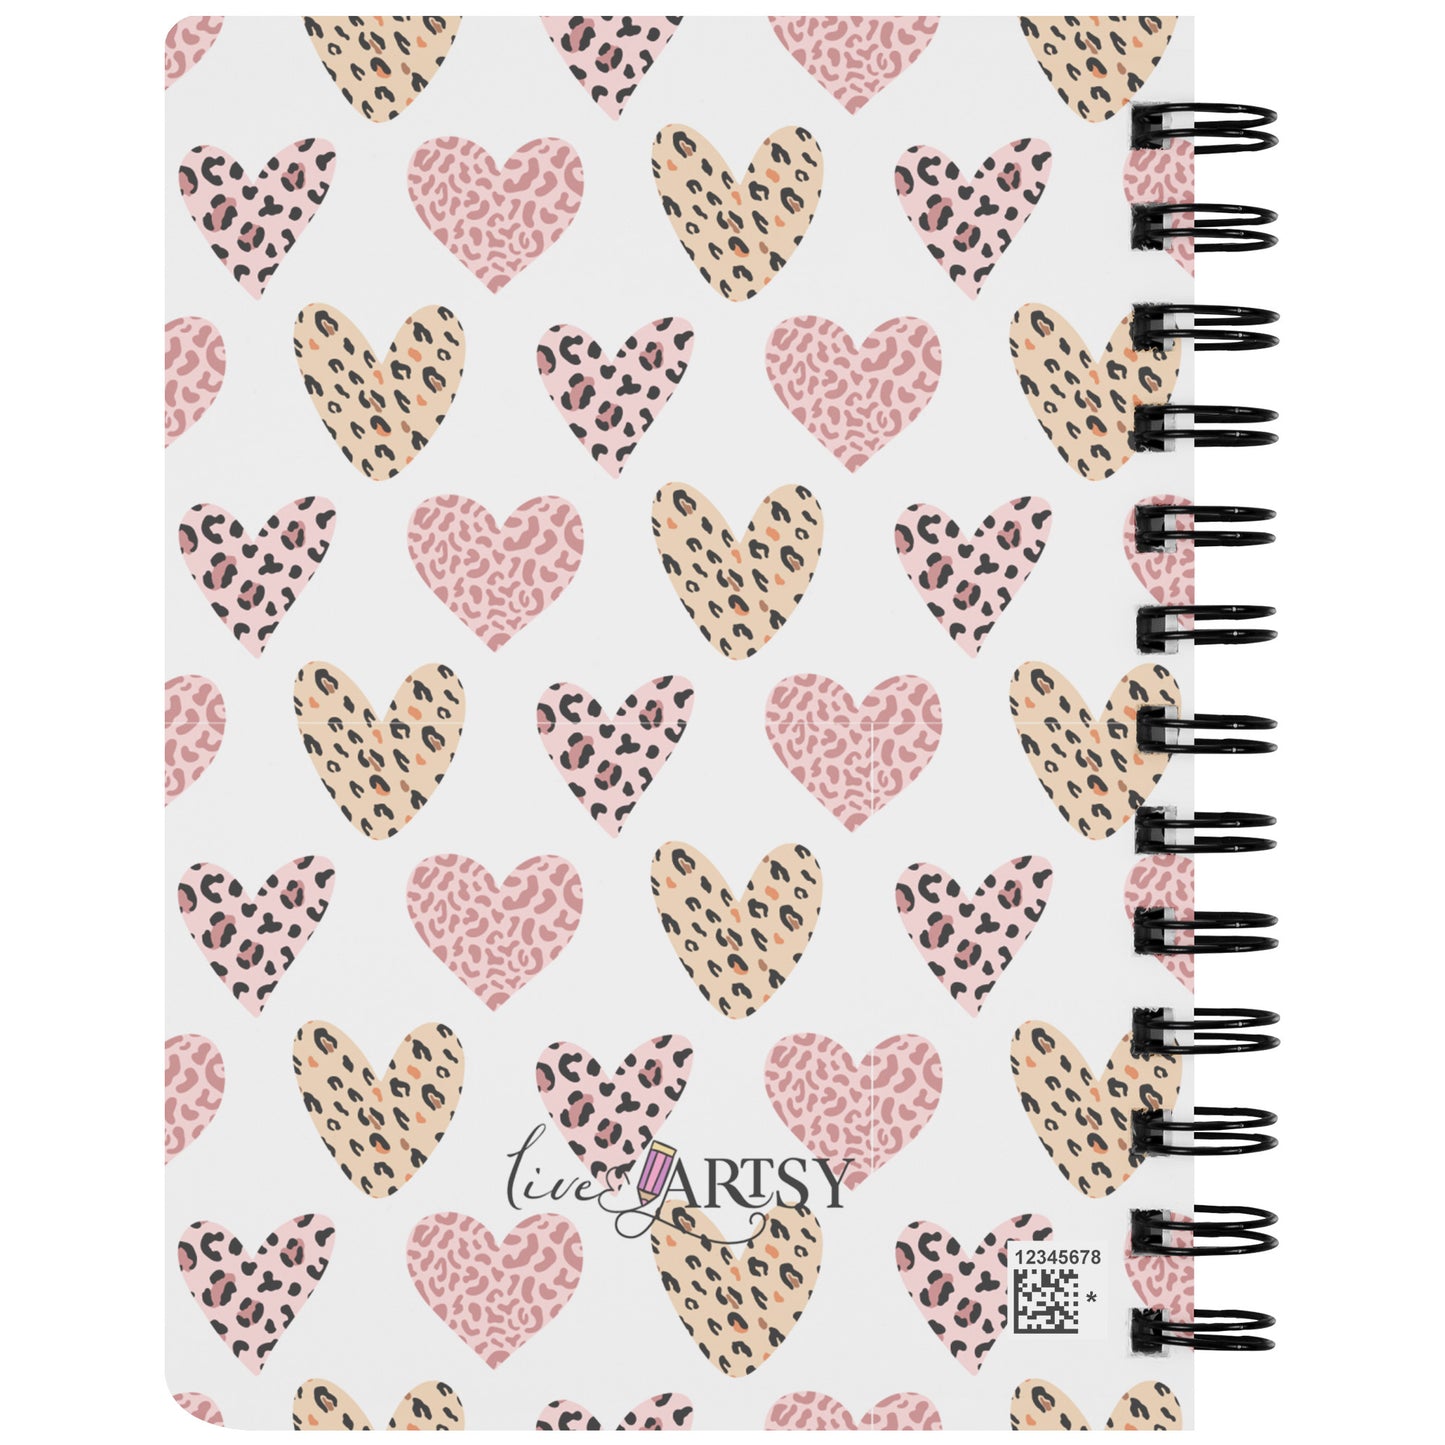 Love Leopard Hearts Spiral Journal Notebook